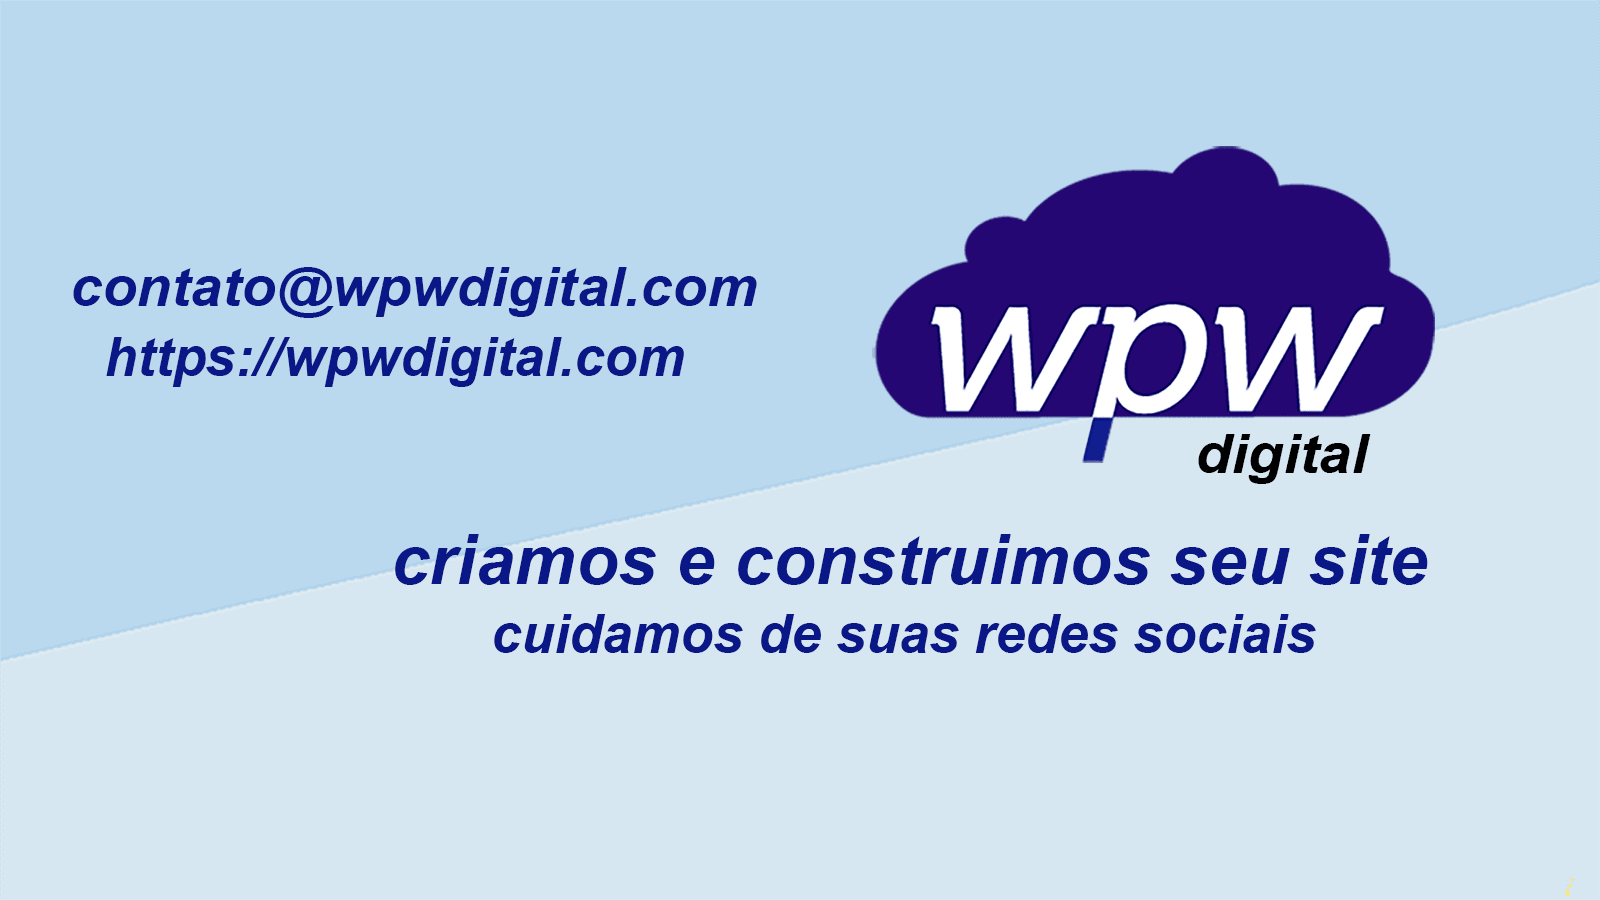 WPW Digital